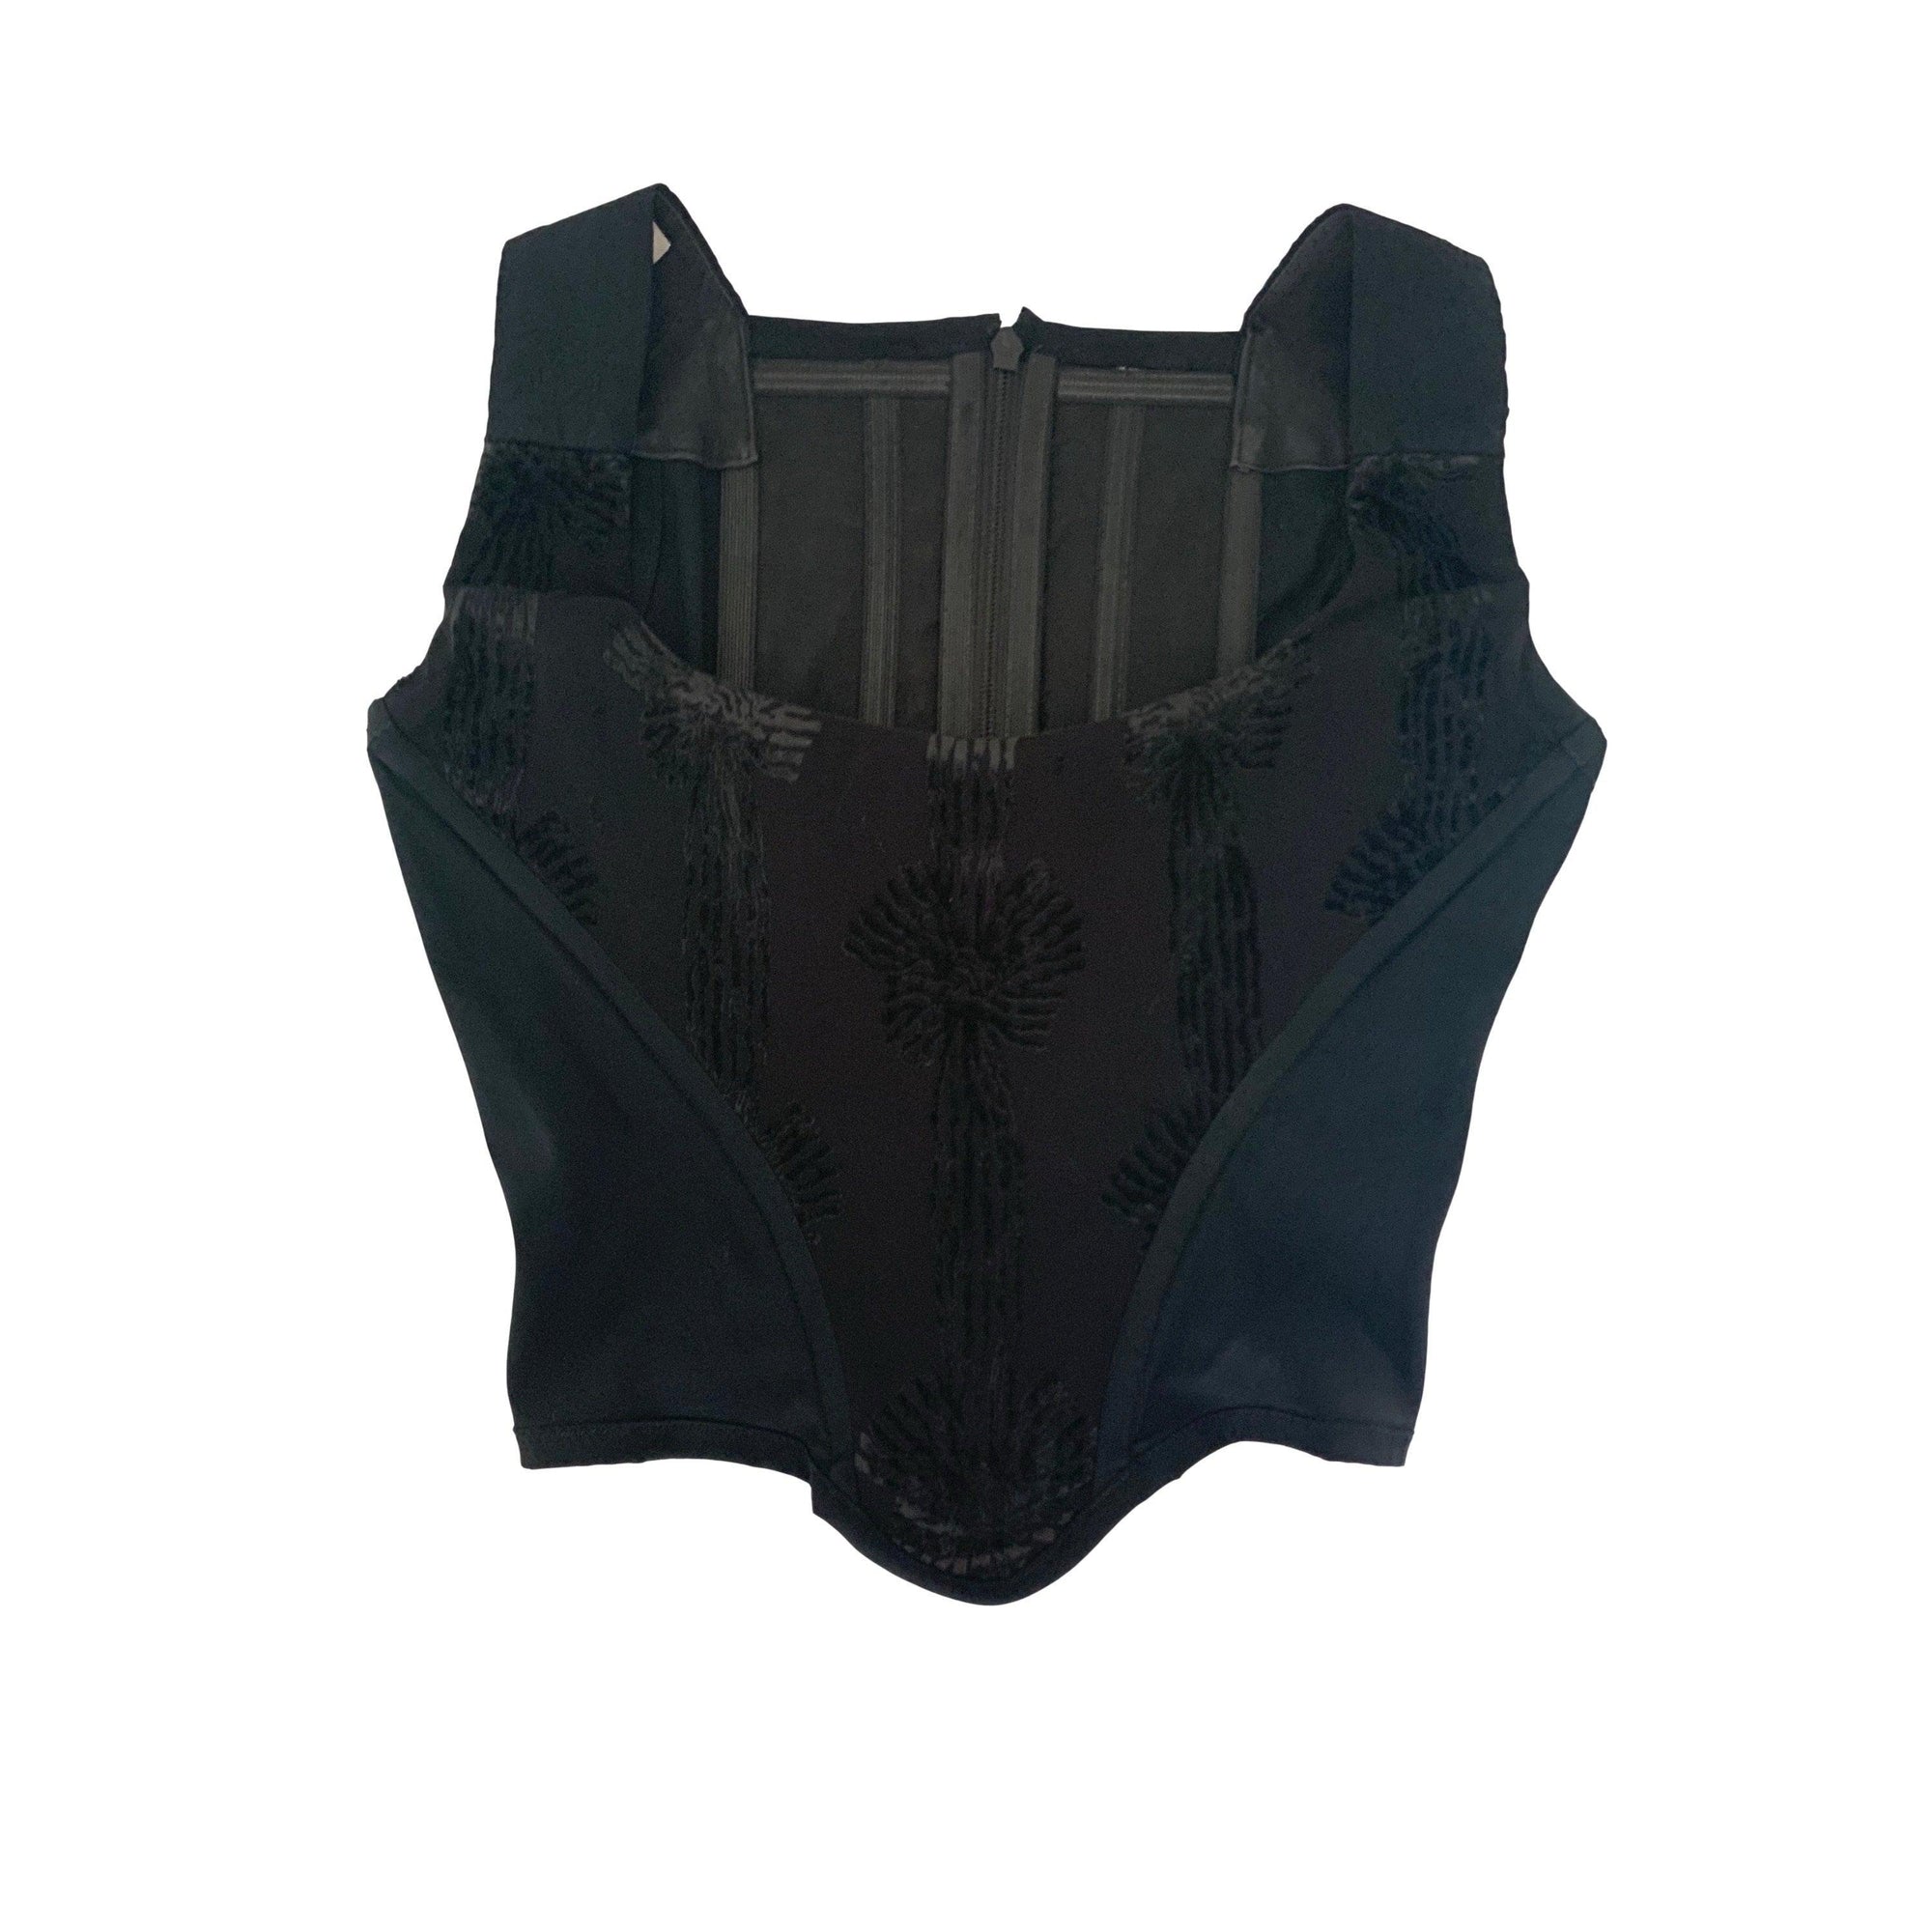 Vivienne Westwood Black Textured Corset - Apparel